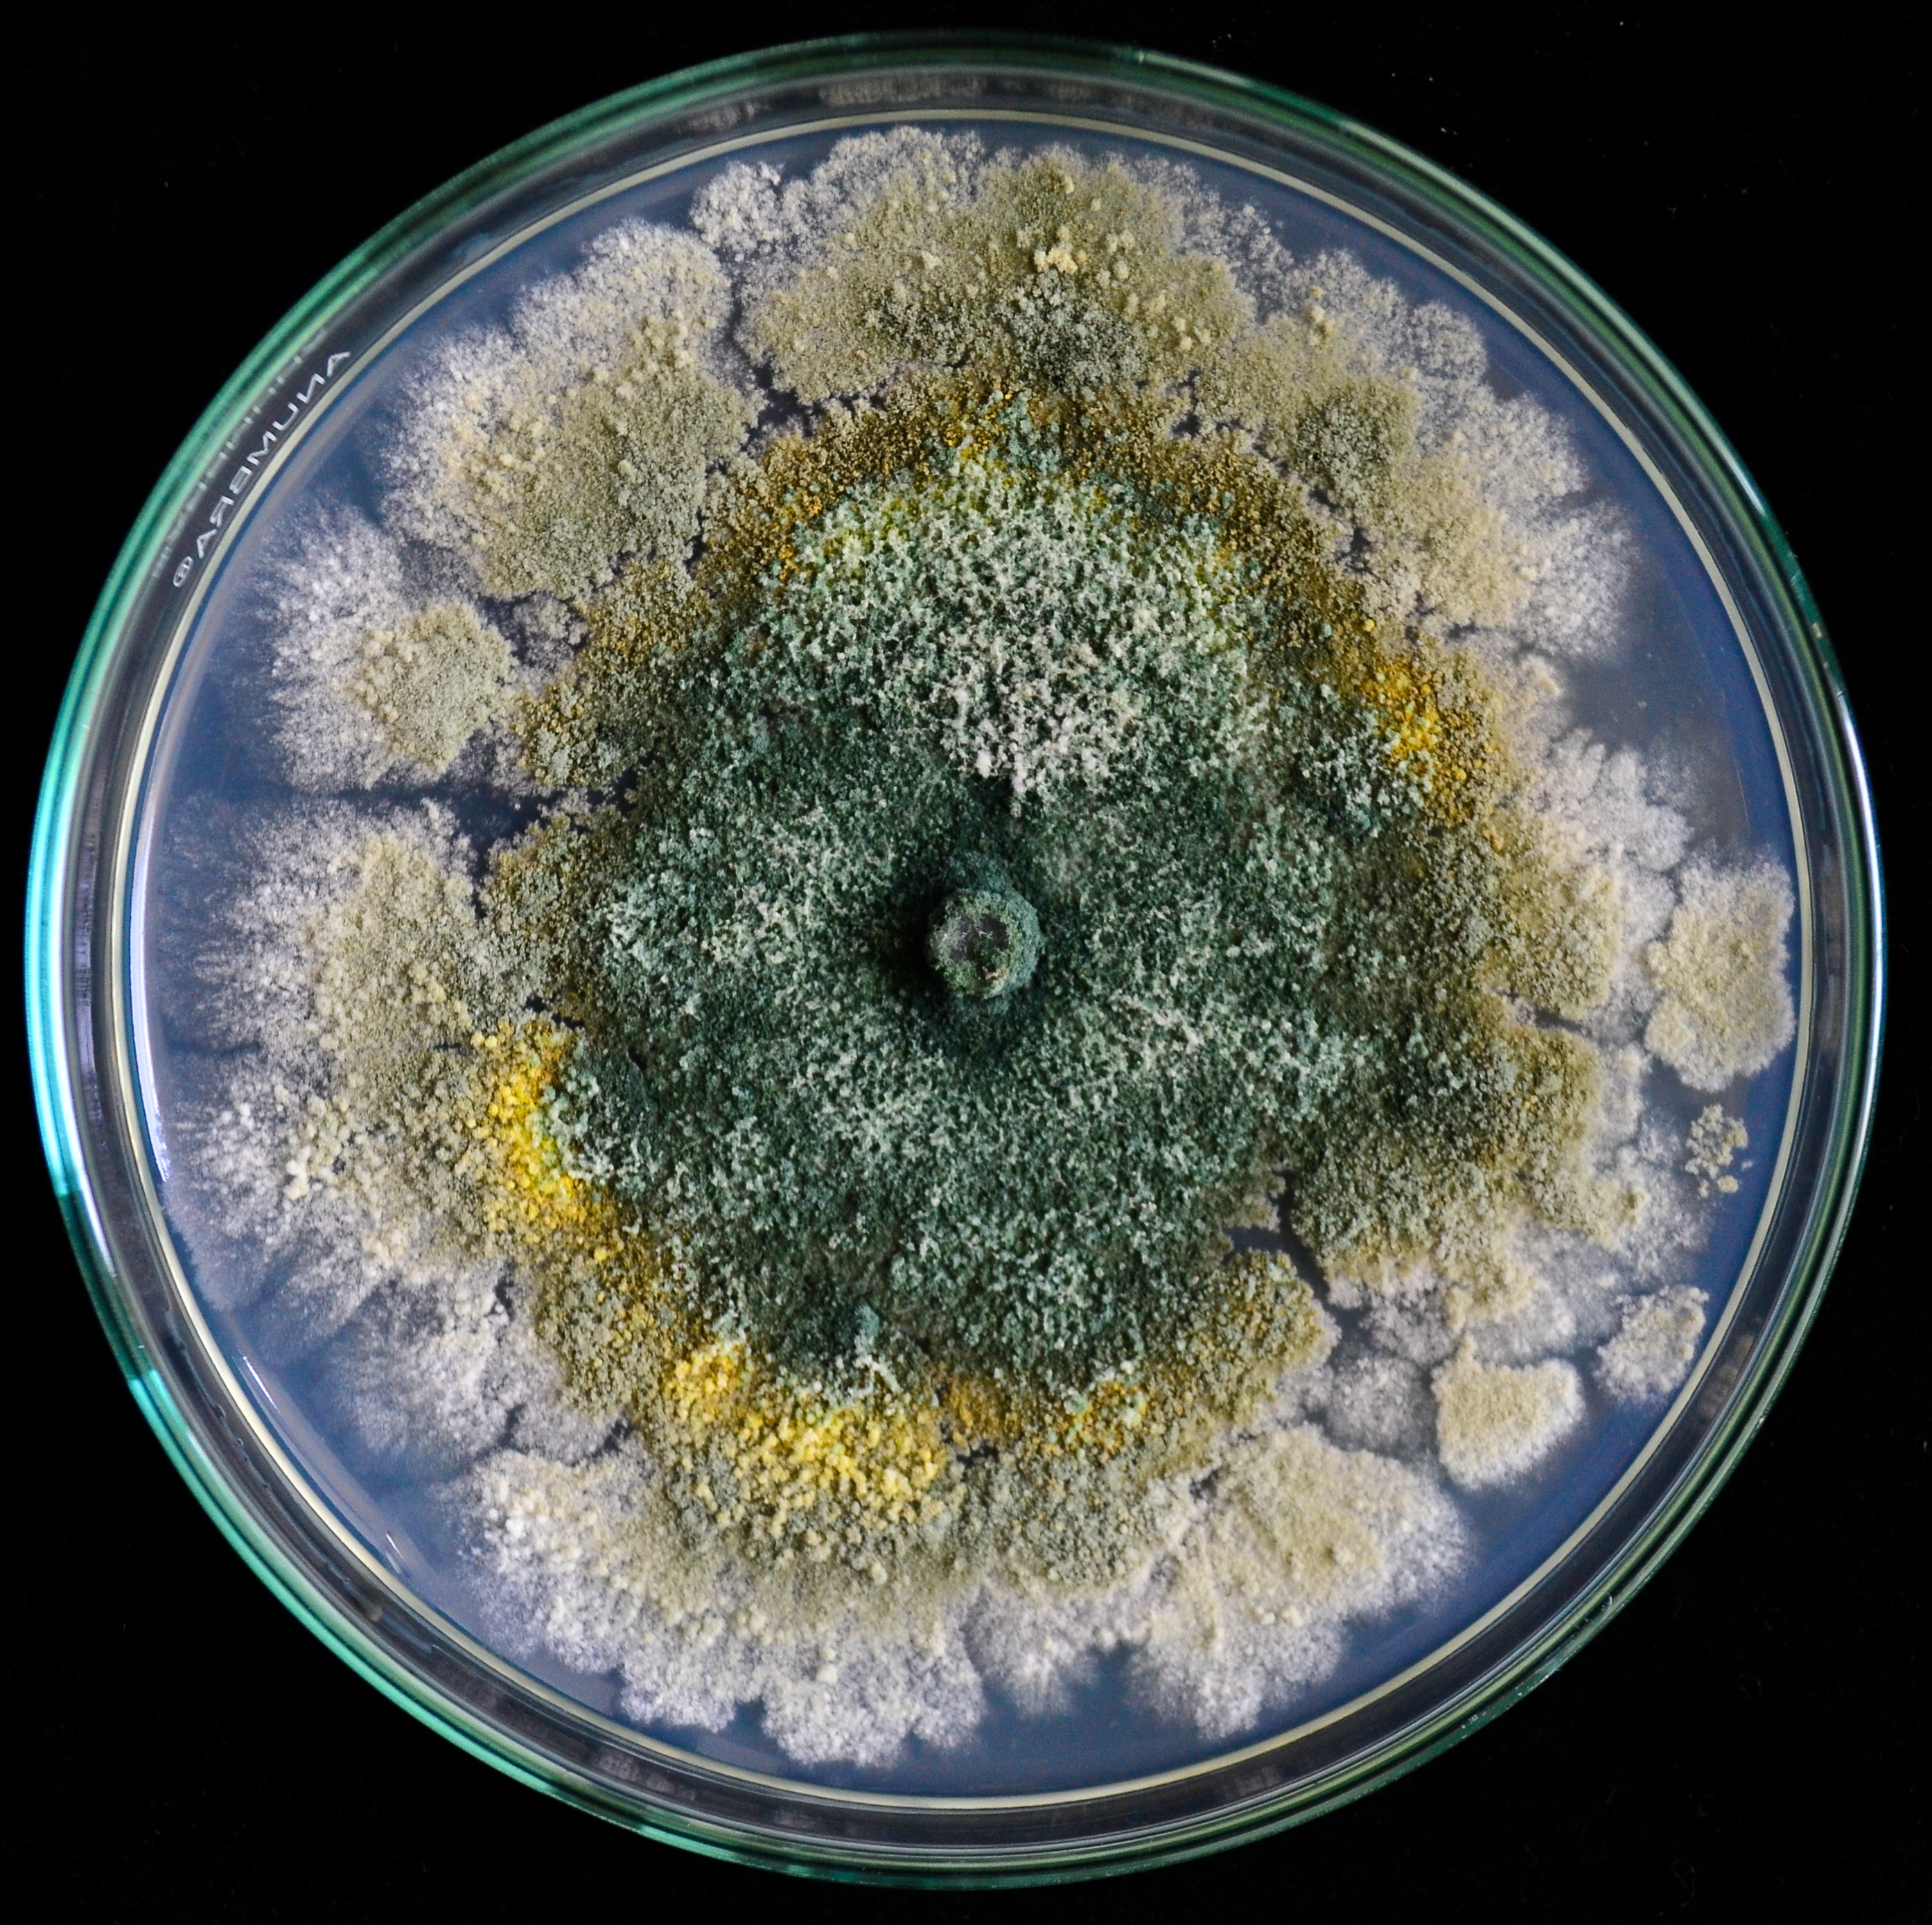 Trichoderma mold growing on agar in a Petri dish.